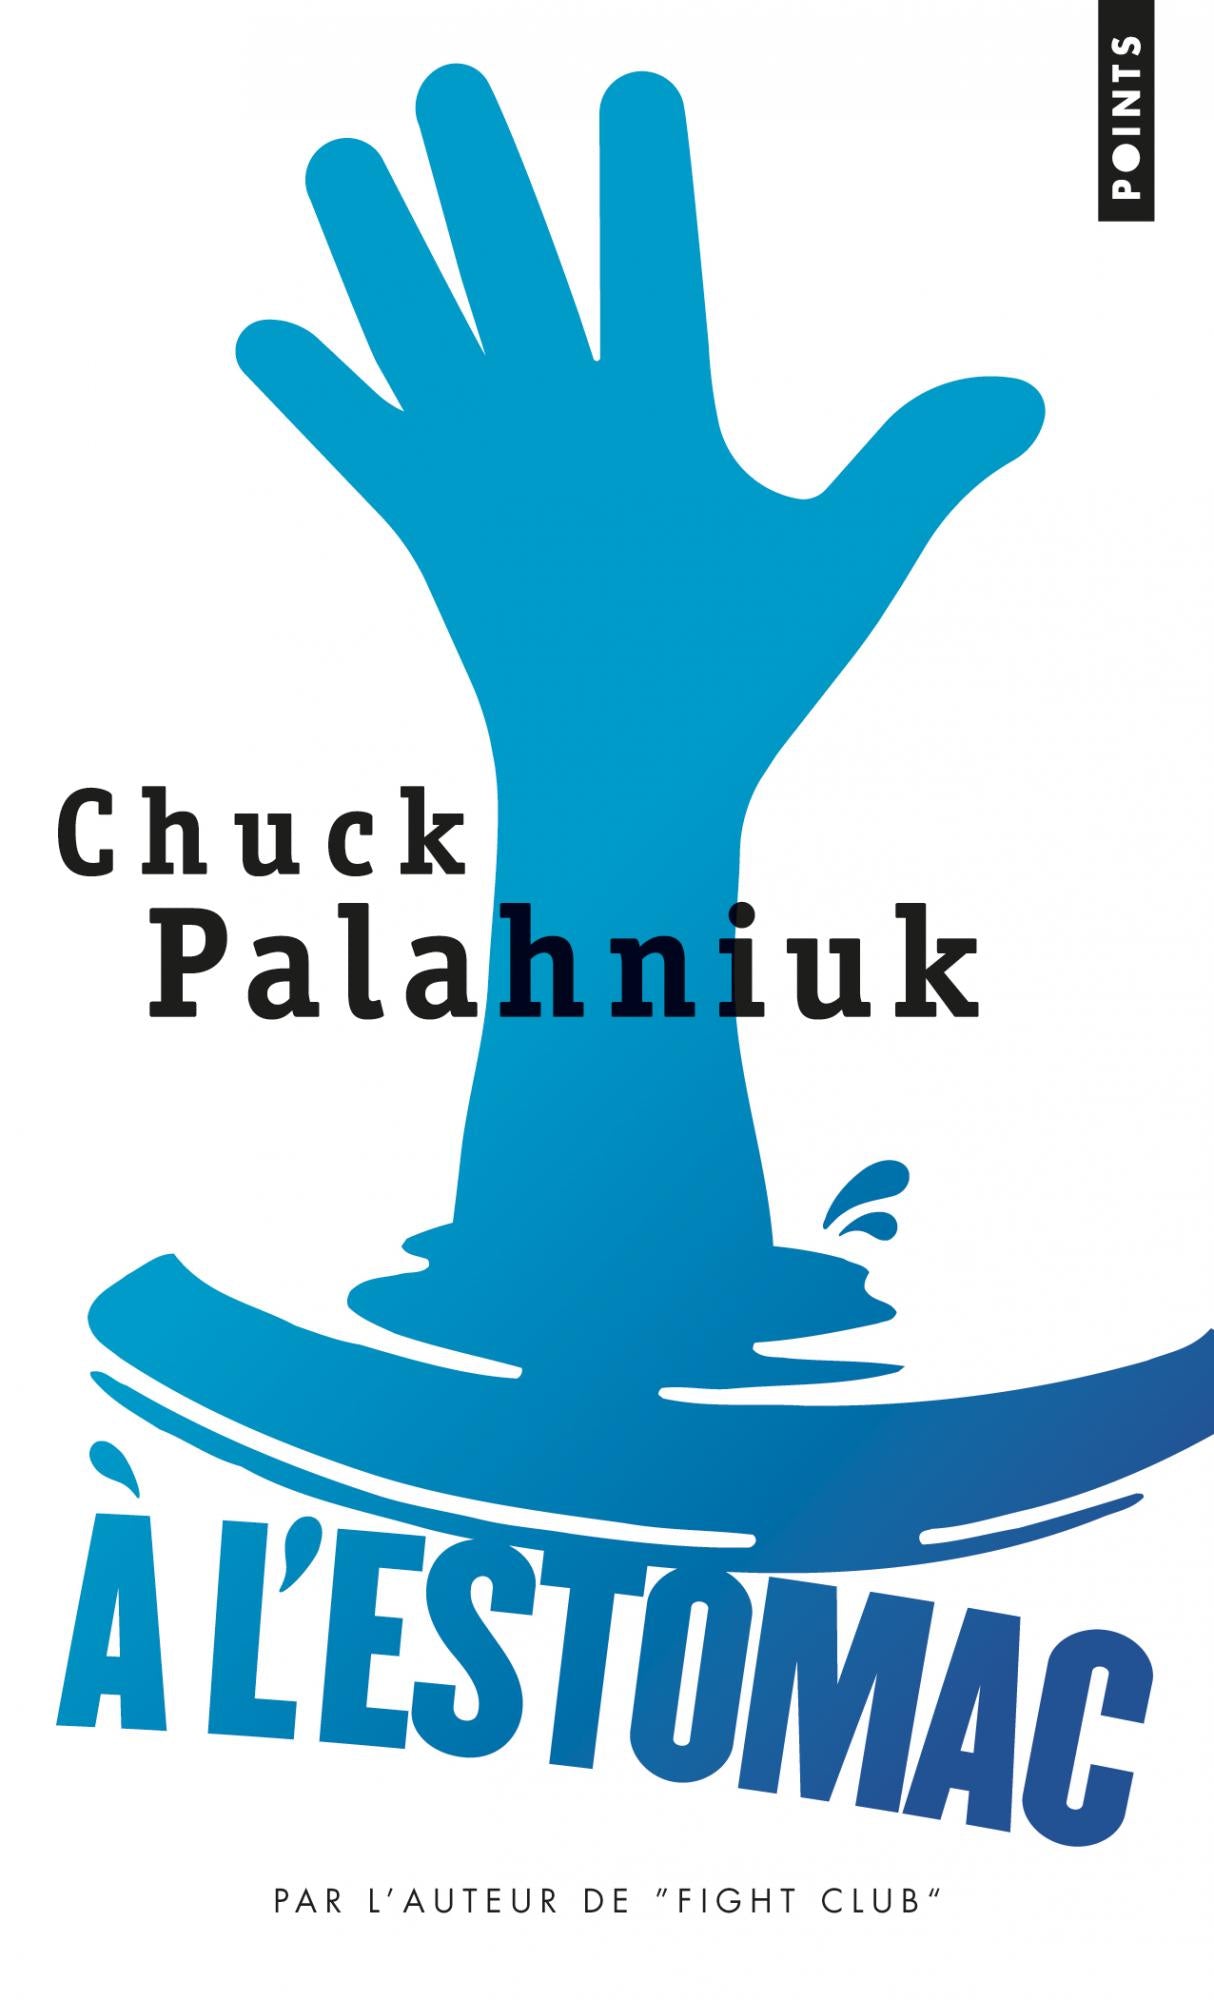 A l’estomac - Chuck Palahniuk